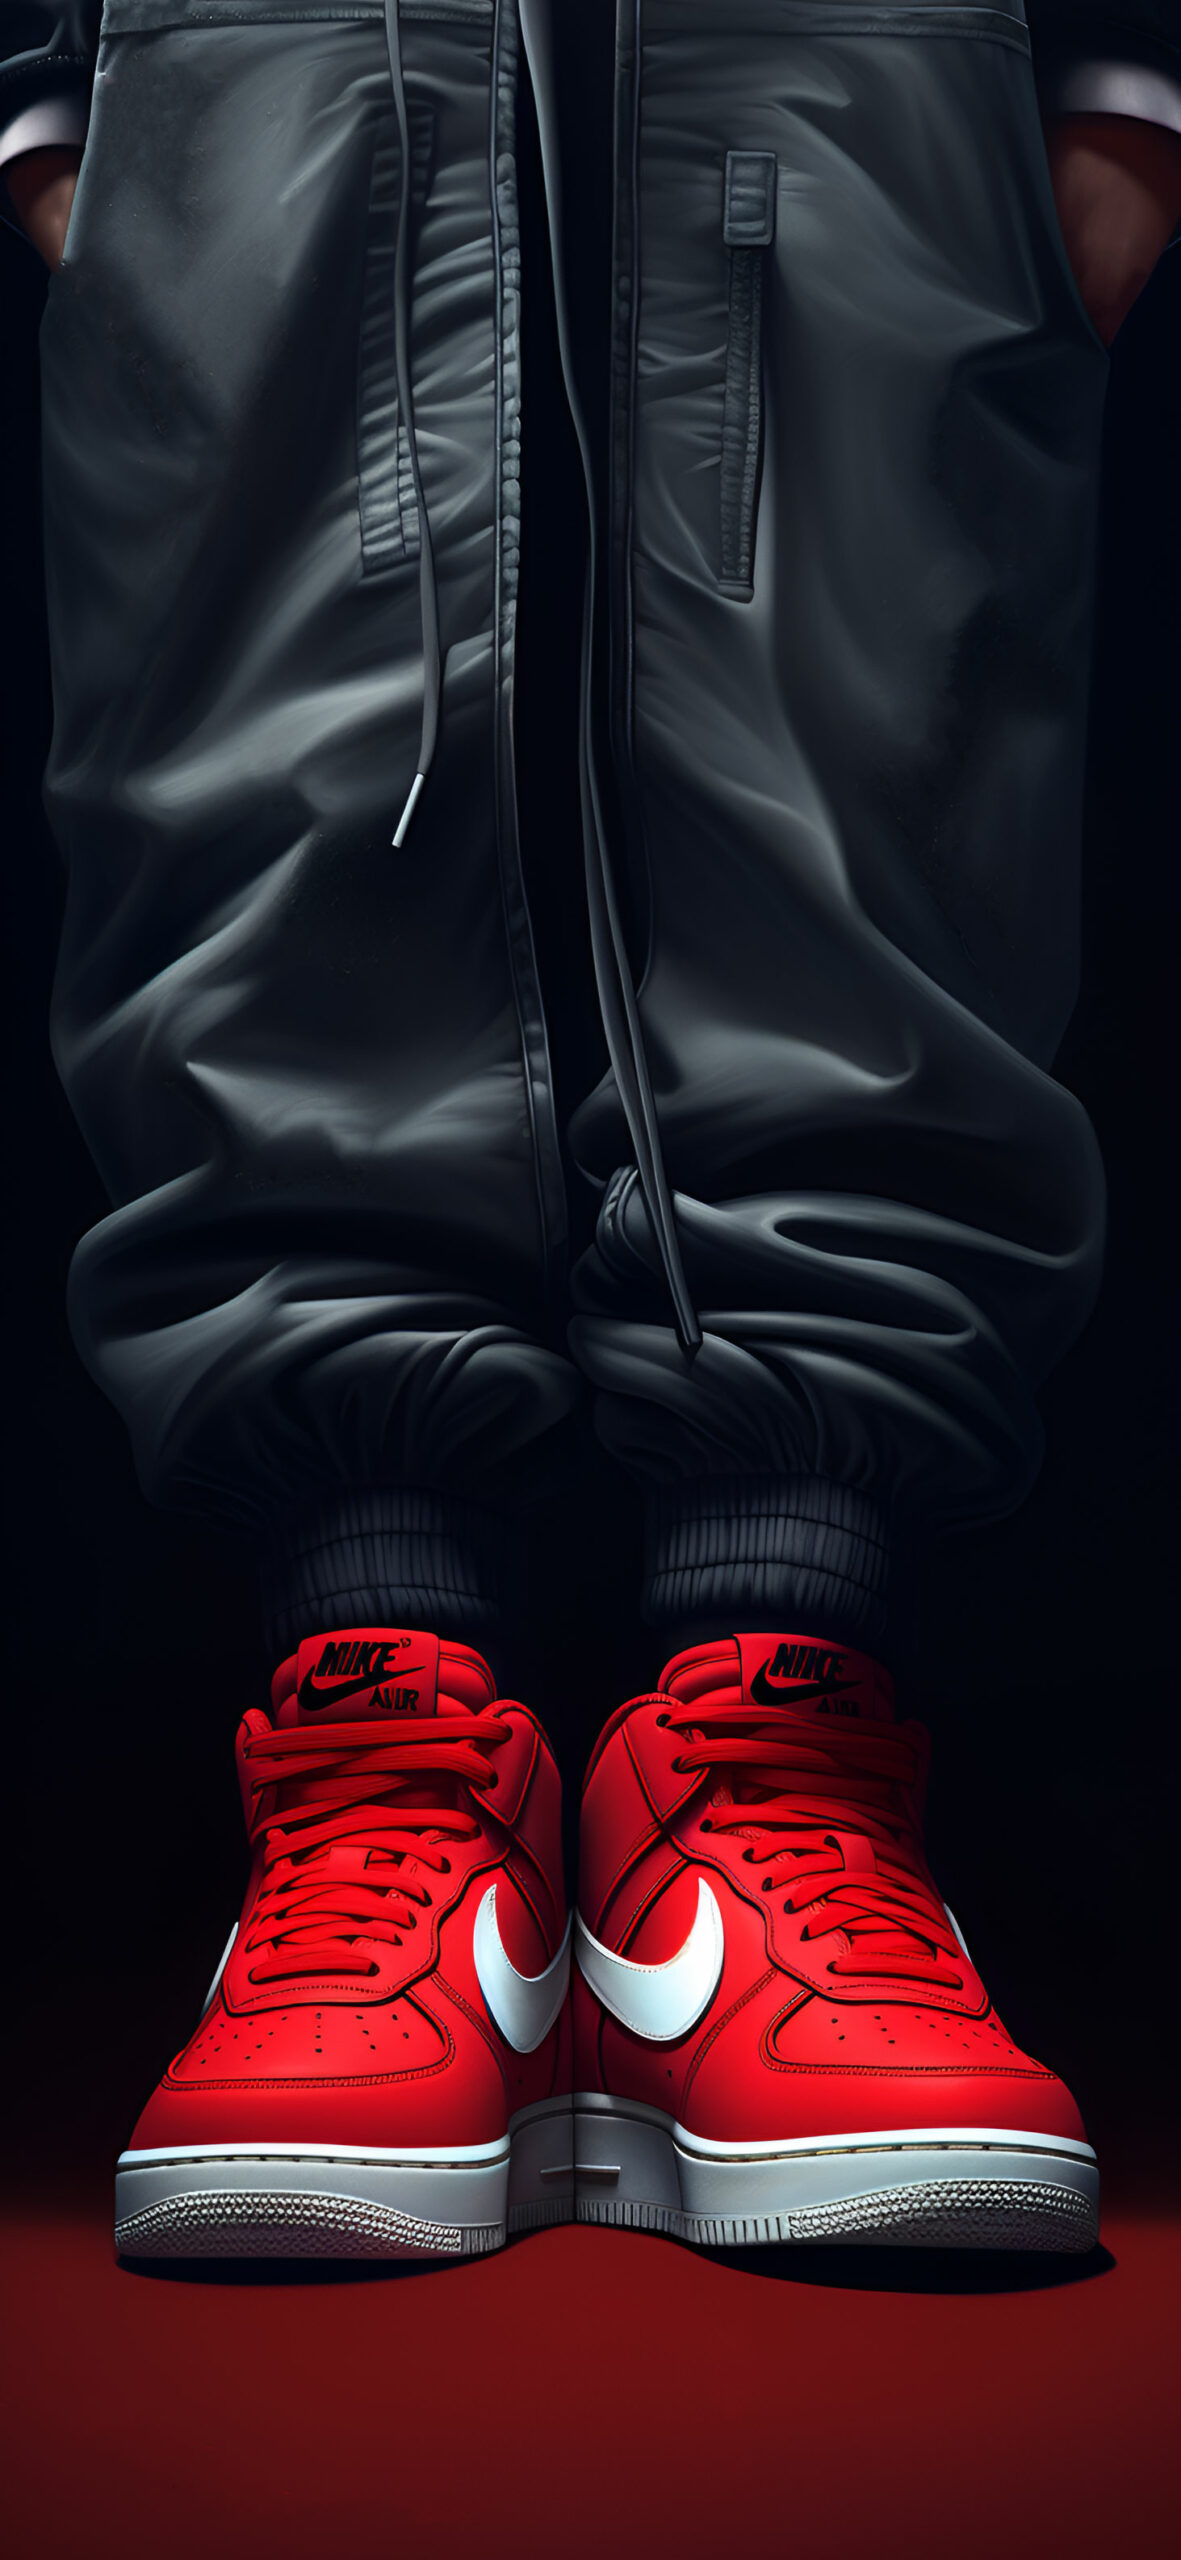 Hypebeast Air Jordan Sneakers Poster – (12x16 Inch) Unframed – AJ Wall art,  Hypebeast Room Decor, Michael Jordan Poster, Sneaker Air Gym Shoes Shoebox  Collection Aesthetic Cool Poster for Teen Boys :